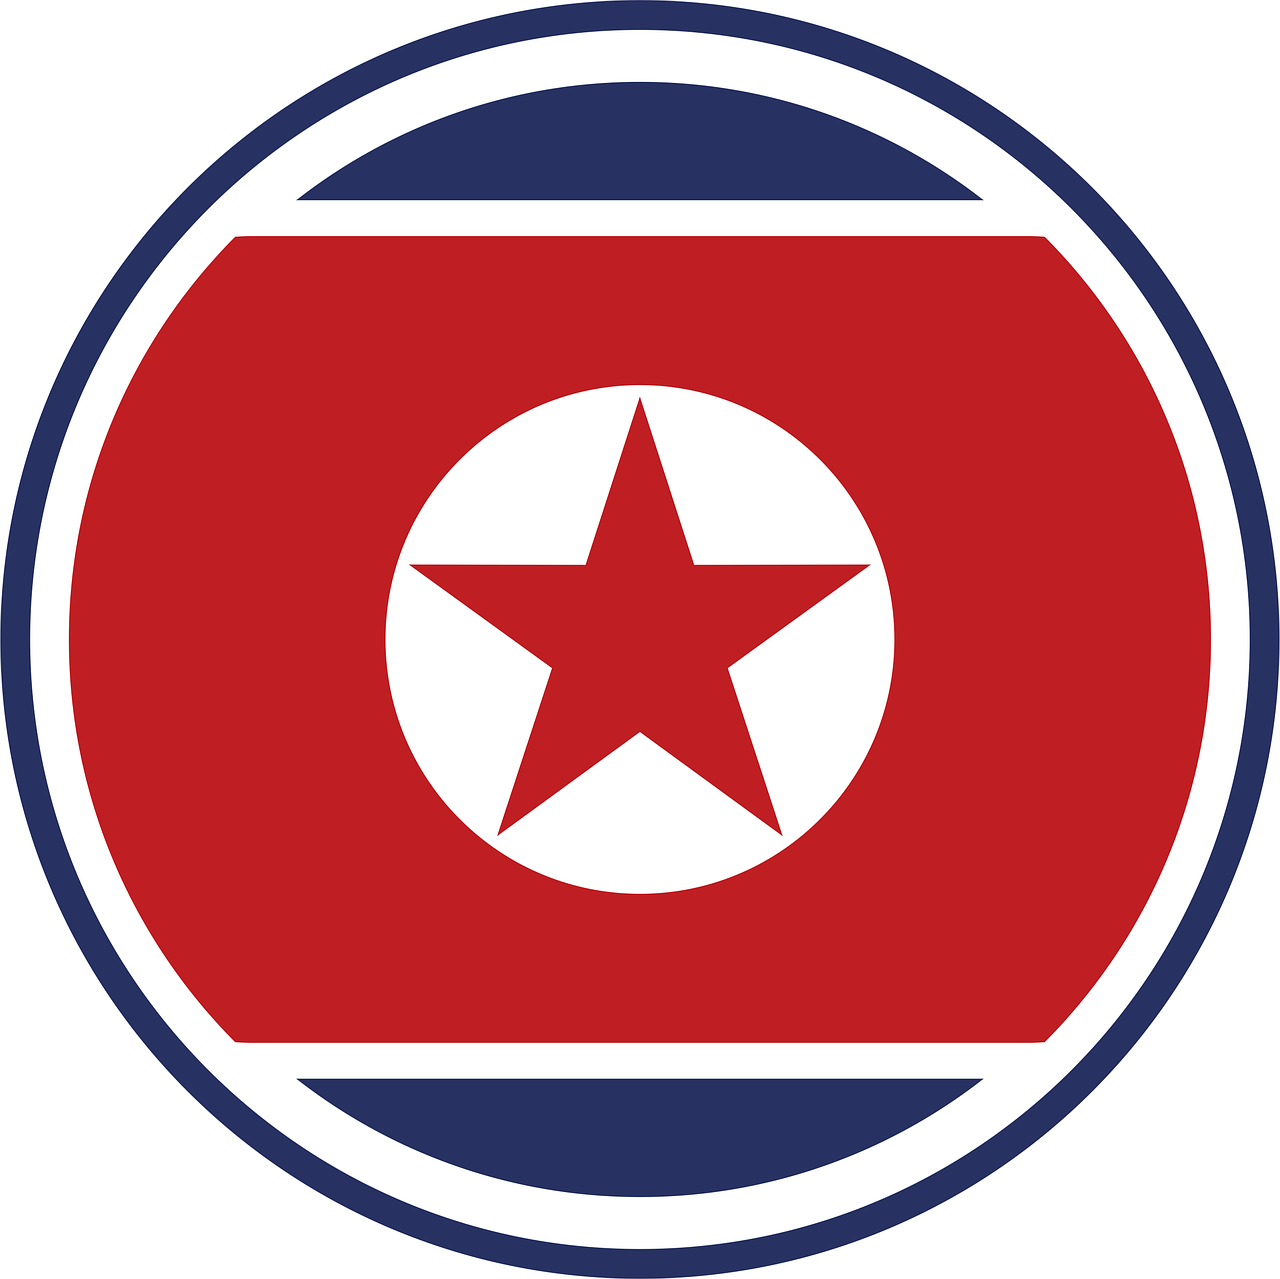 north korean flag symbol circle free photo